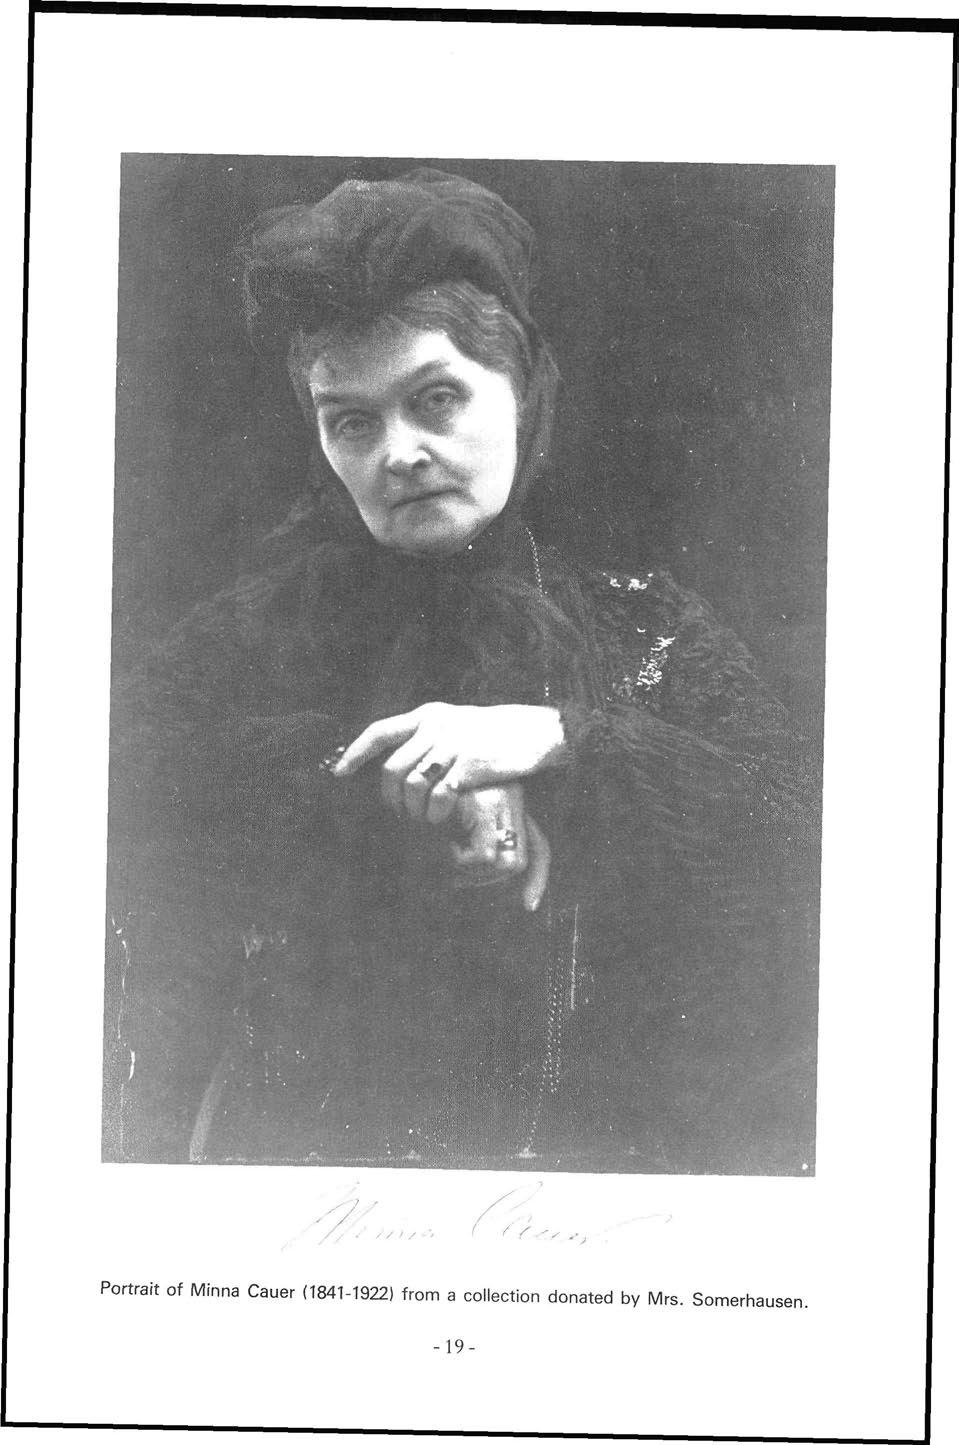 Portrait of Minna Cauer (1841-1922) from a